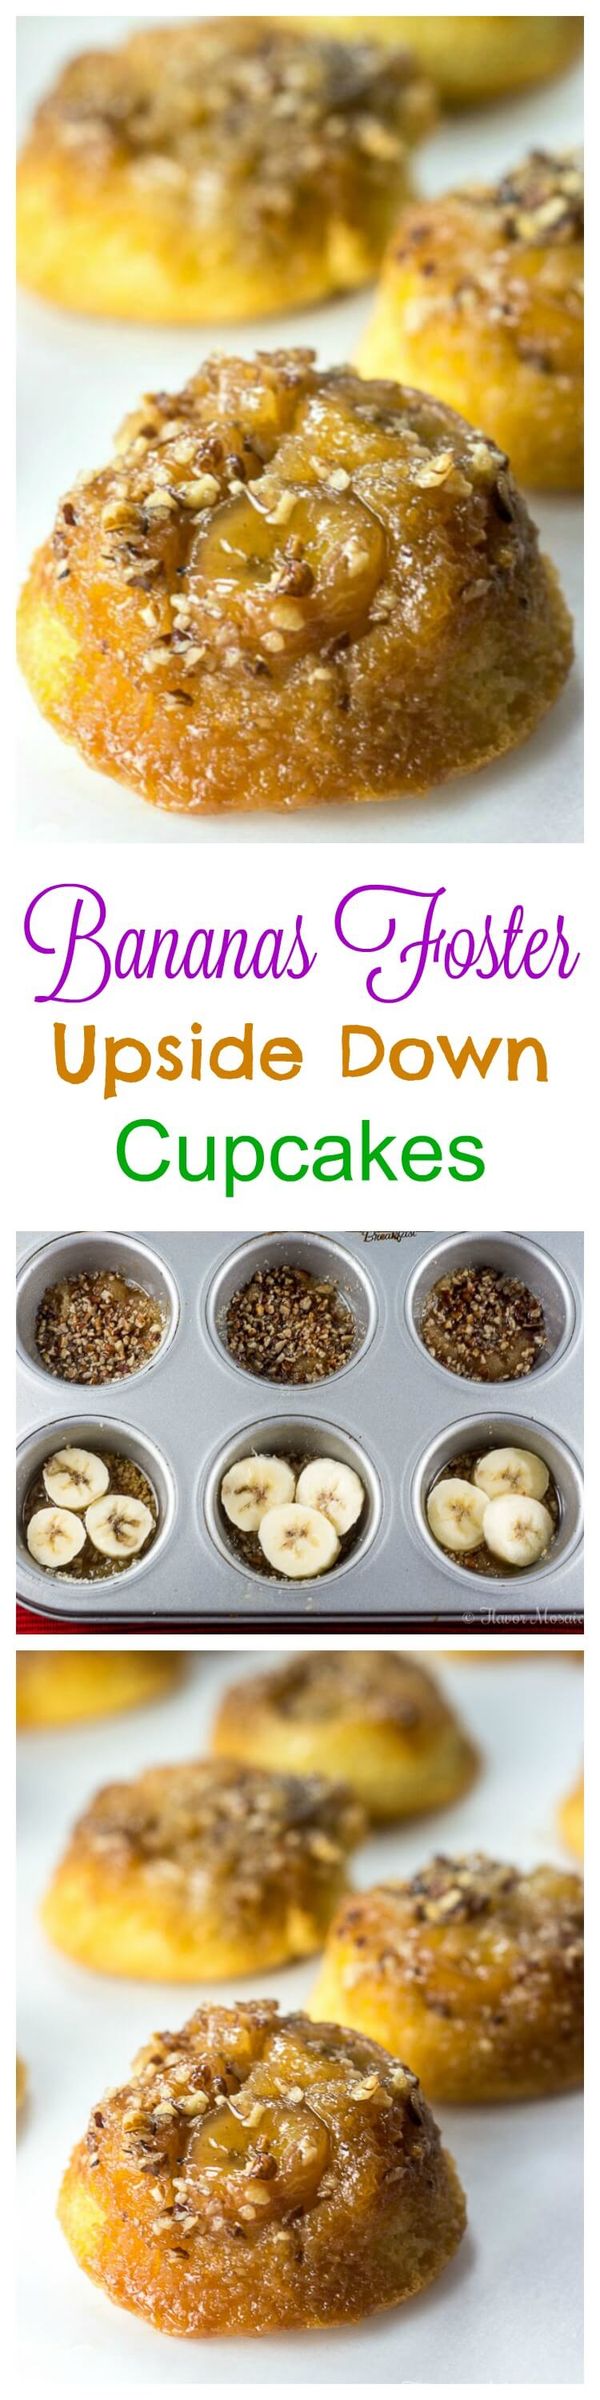 Bananas Foster Upside Down Cupcakes